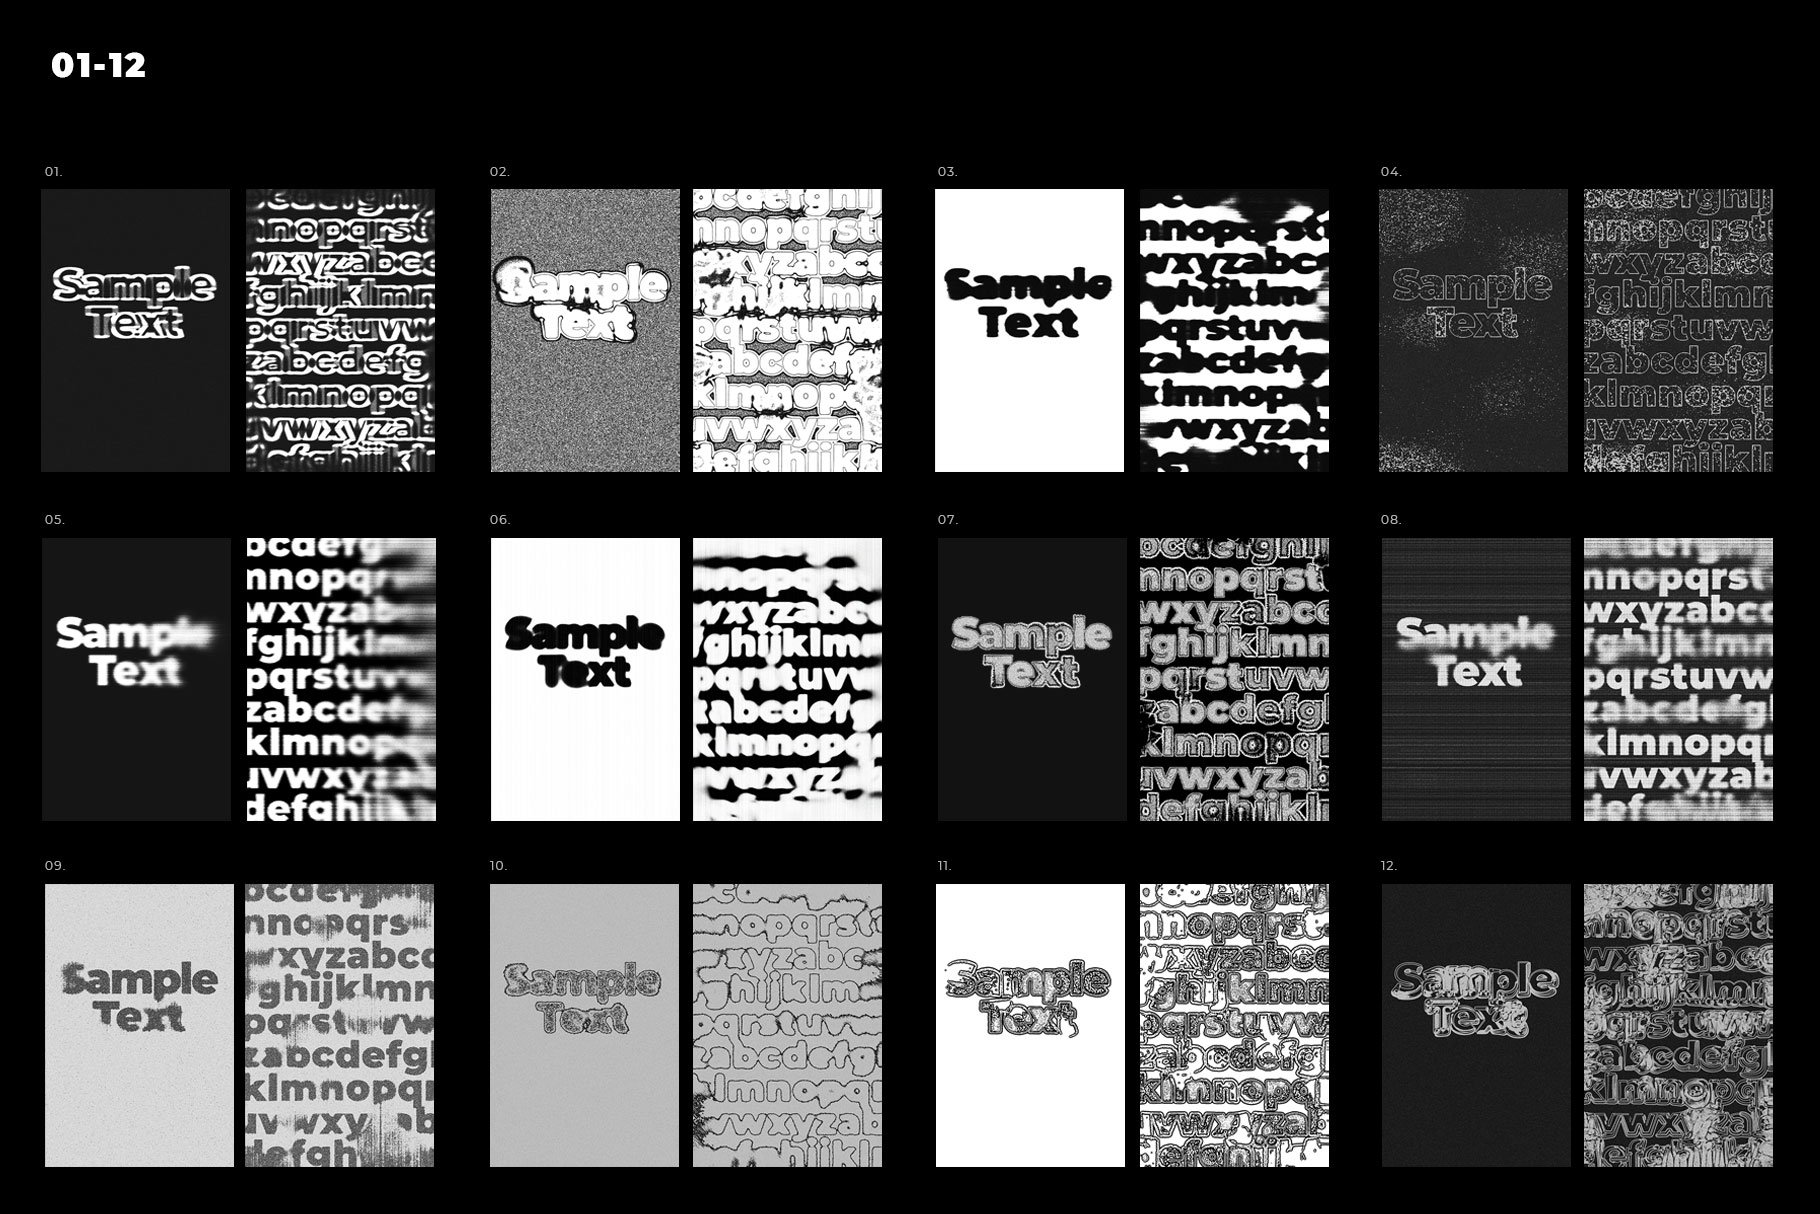 Inartflow 40种艺术抽象失真故障扭曲印刷艺术海报设计复古文字效果 40 Photoshop Text Effects Vol.2 图片素材 第3张